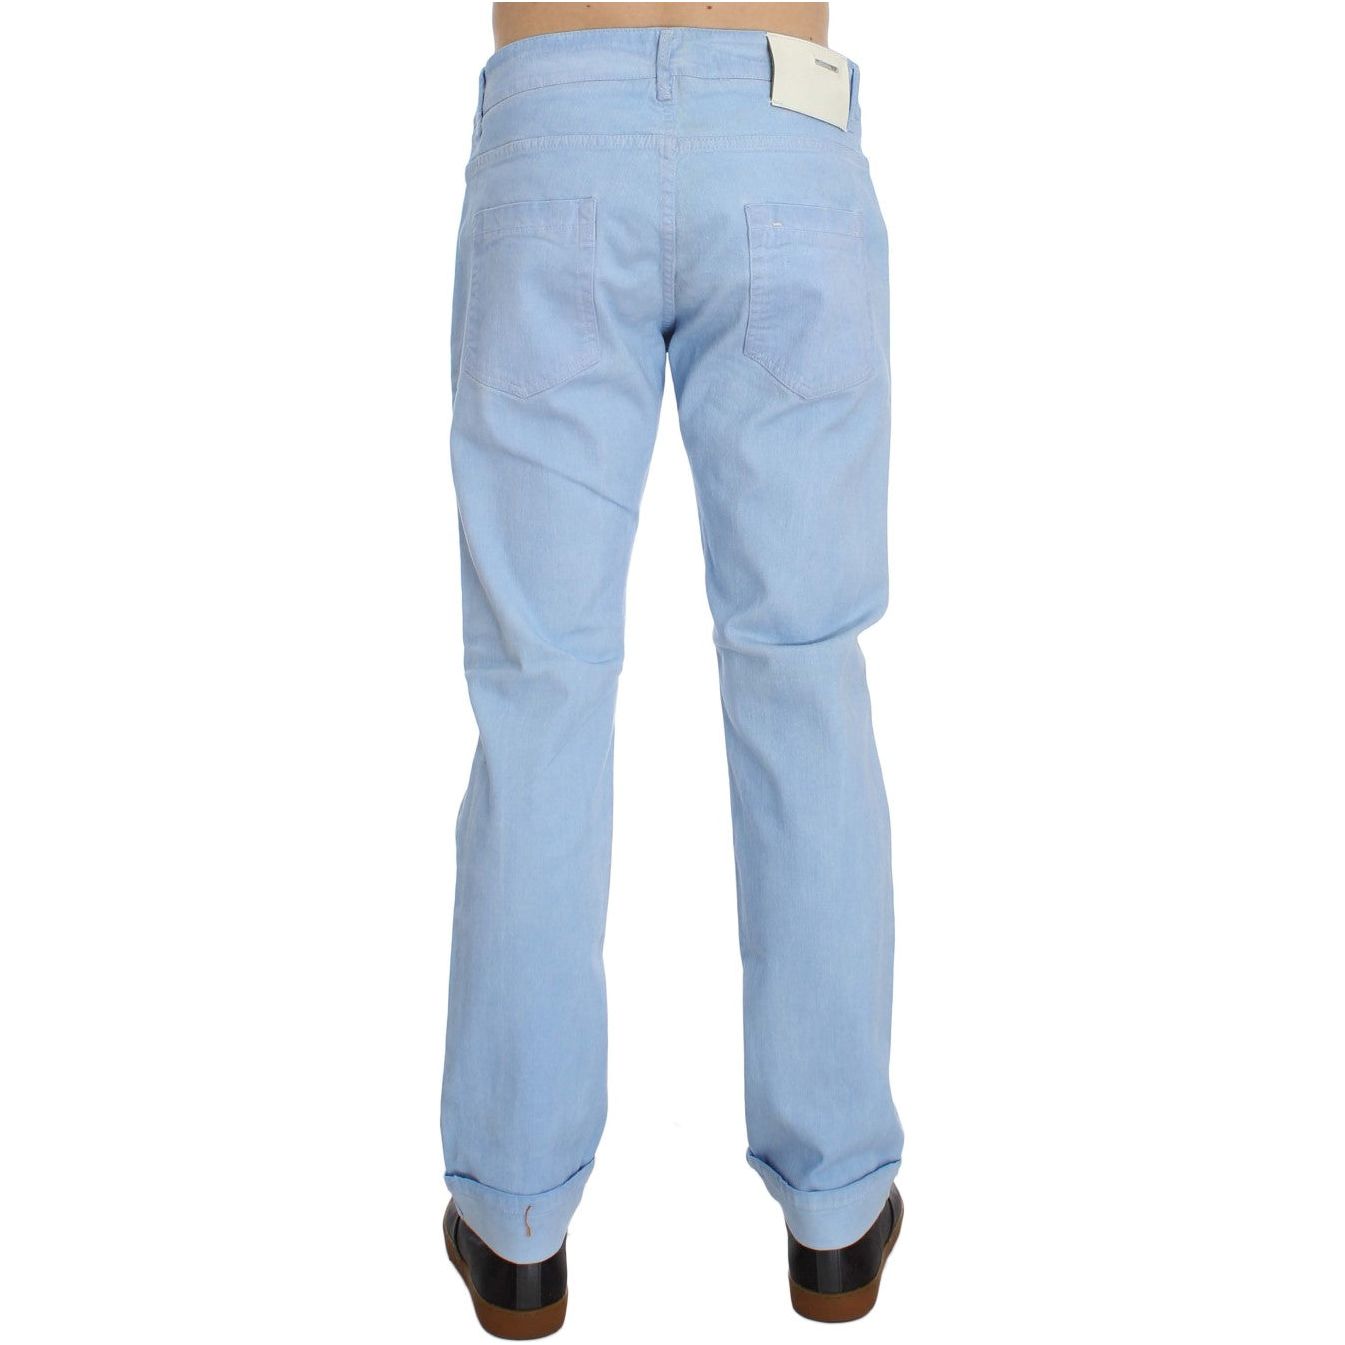 Acht Elegant Low Waist Regular Fit Men's Jeans blue-cotton-stretch-low-waist-fit-jeans 299172-blue-cotton-stretch-low-waist-fit-jeans-3.jpg